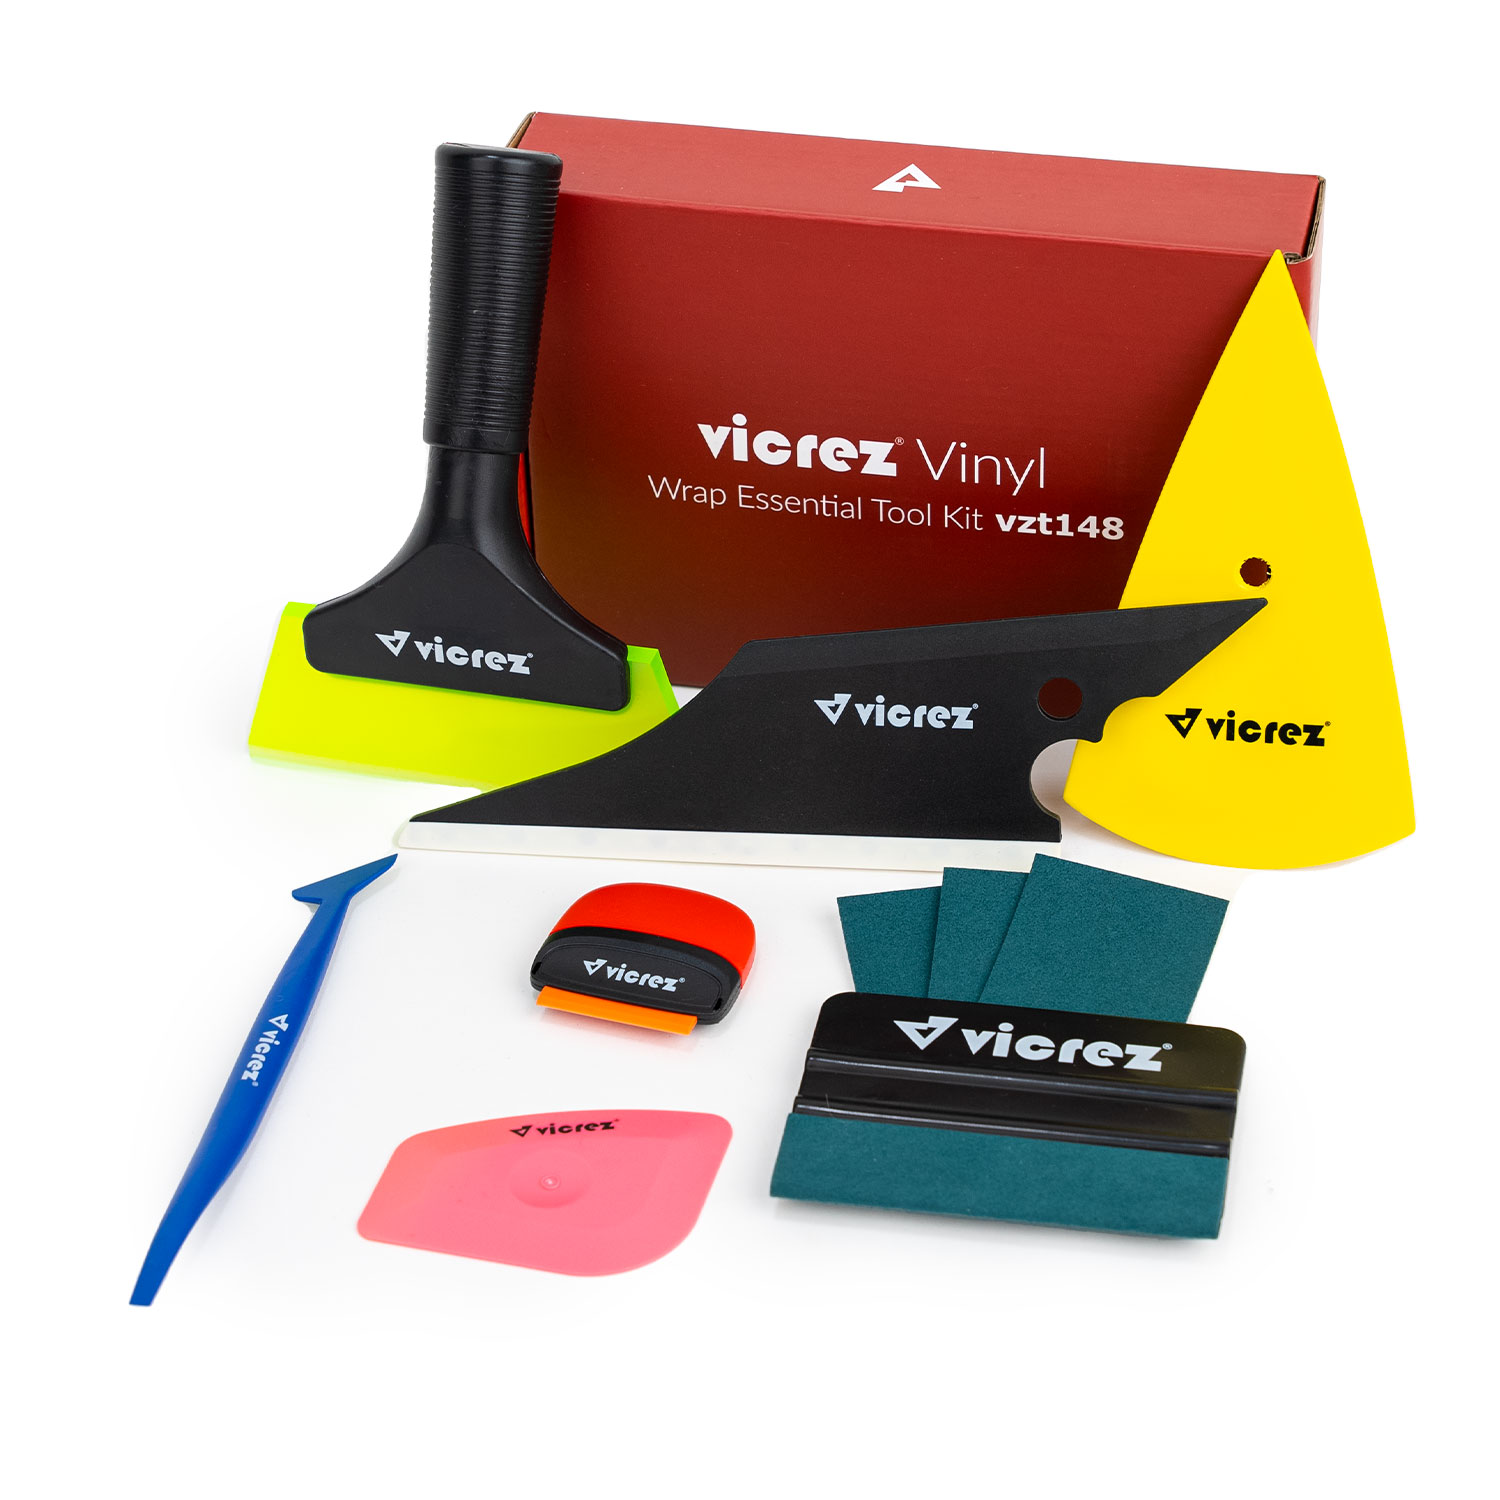 Vicrez vzt148 Vinyl Wrap Essential Tool Kit